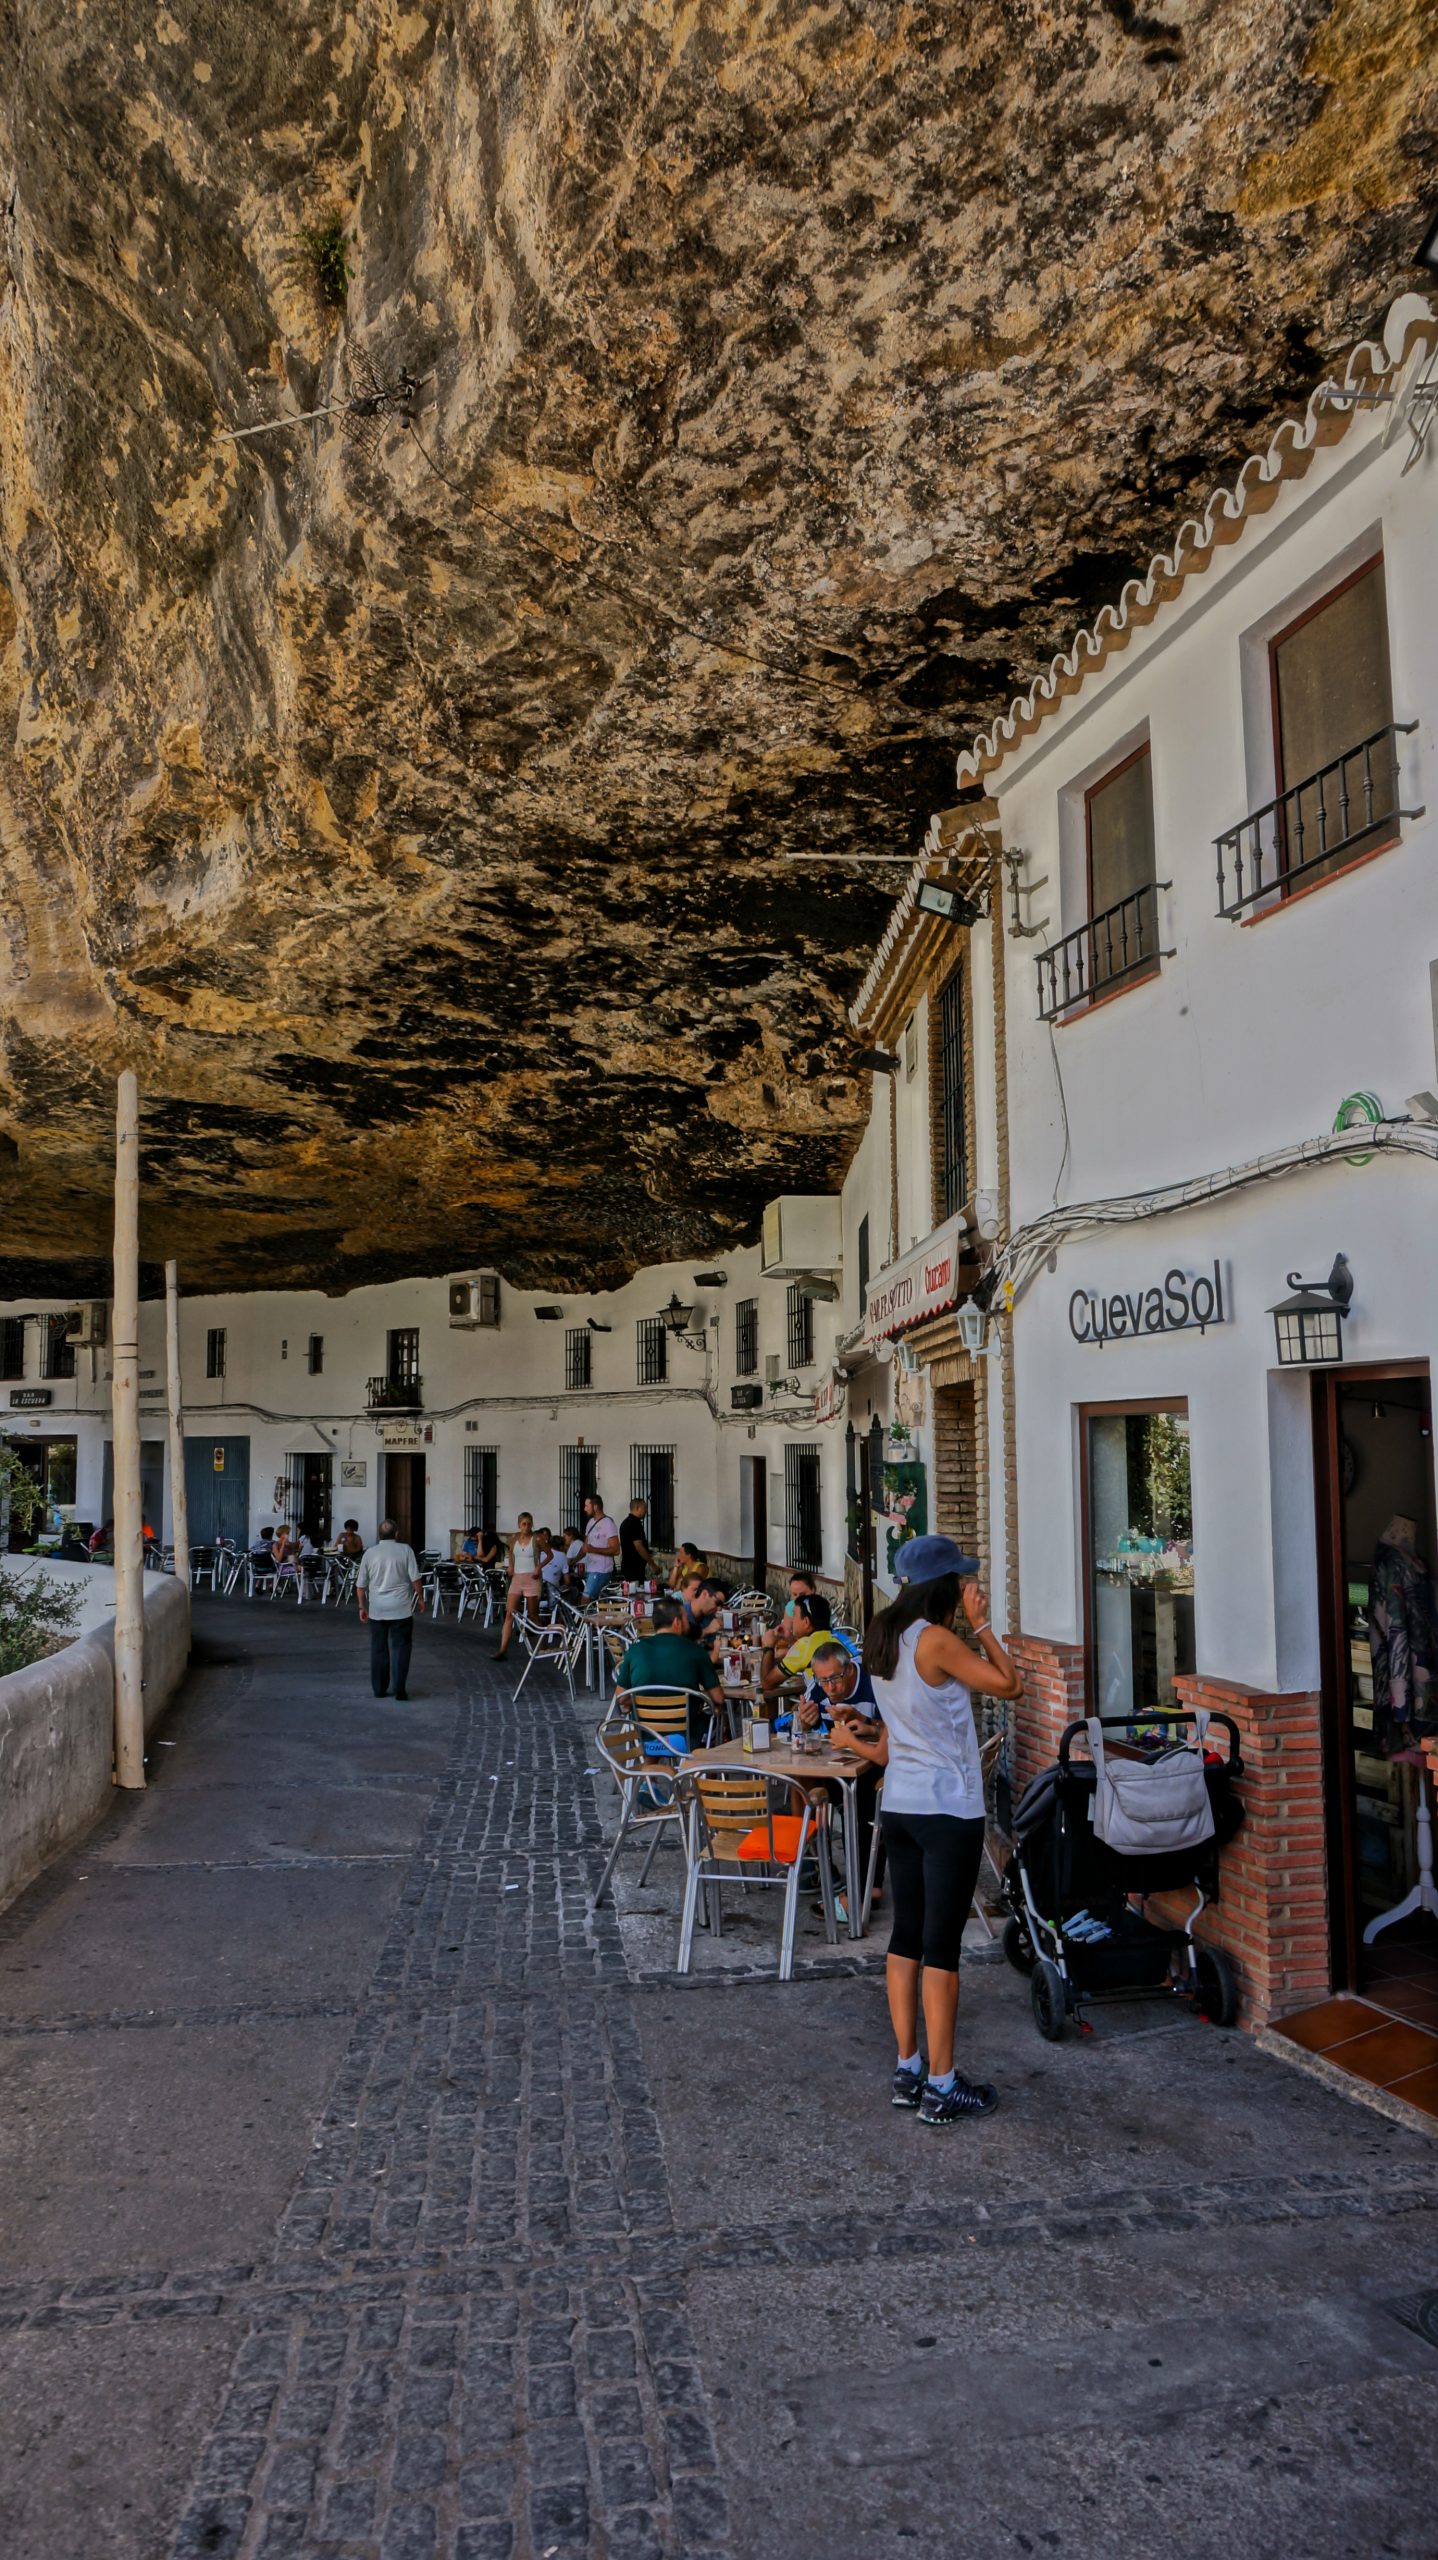 Restaurants built into the rocks: Setenil de las Bodegas